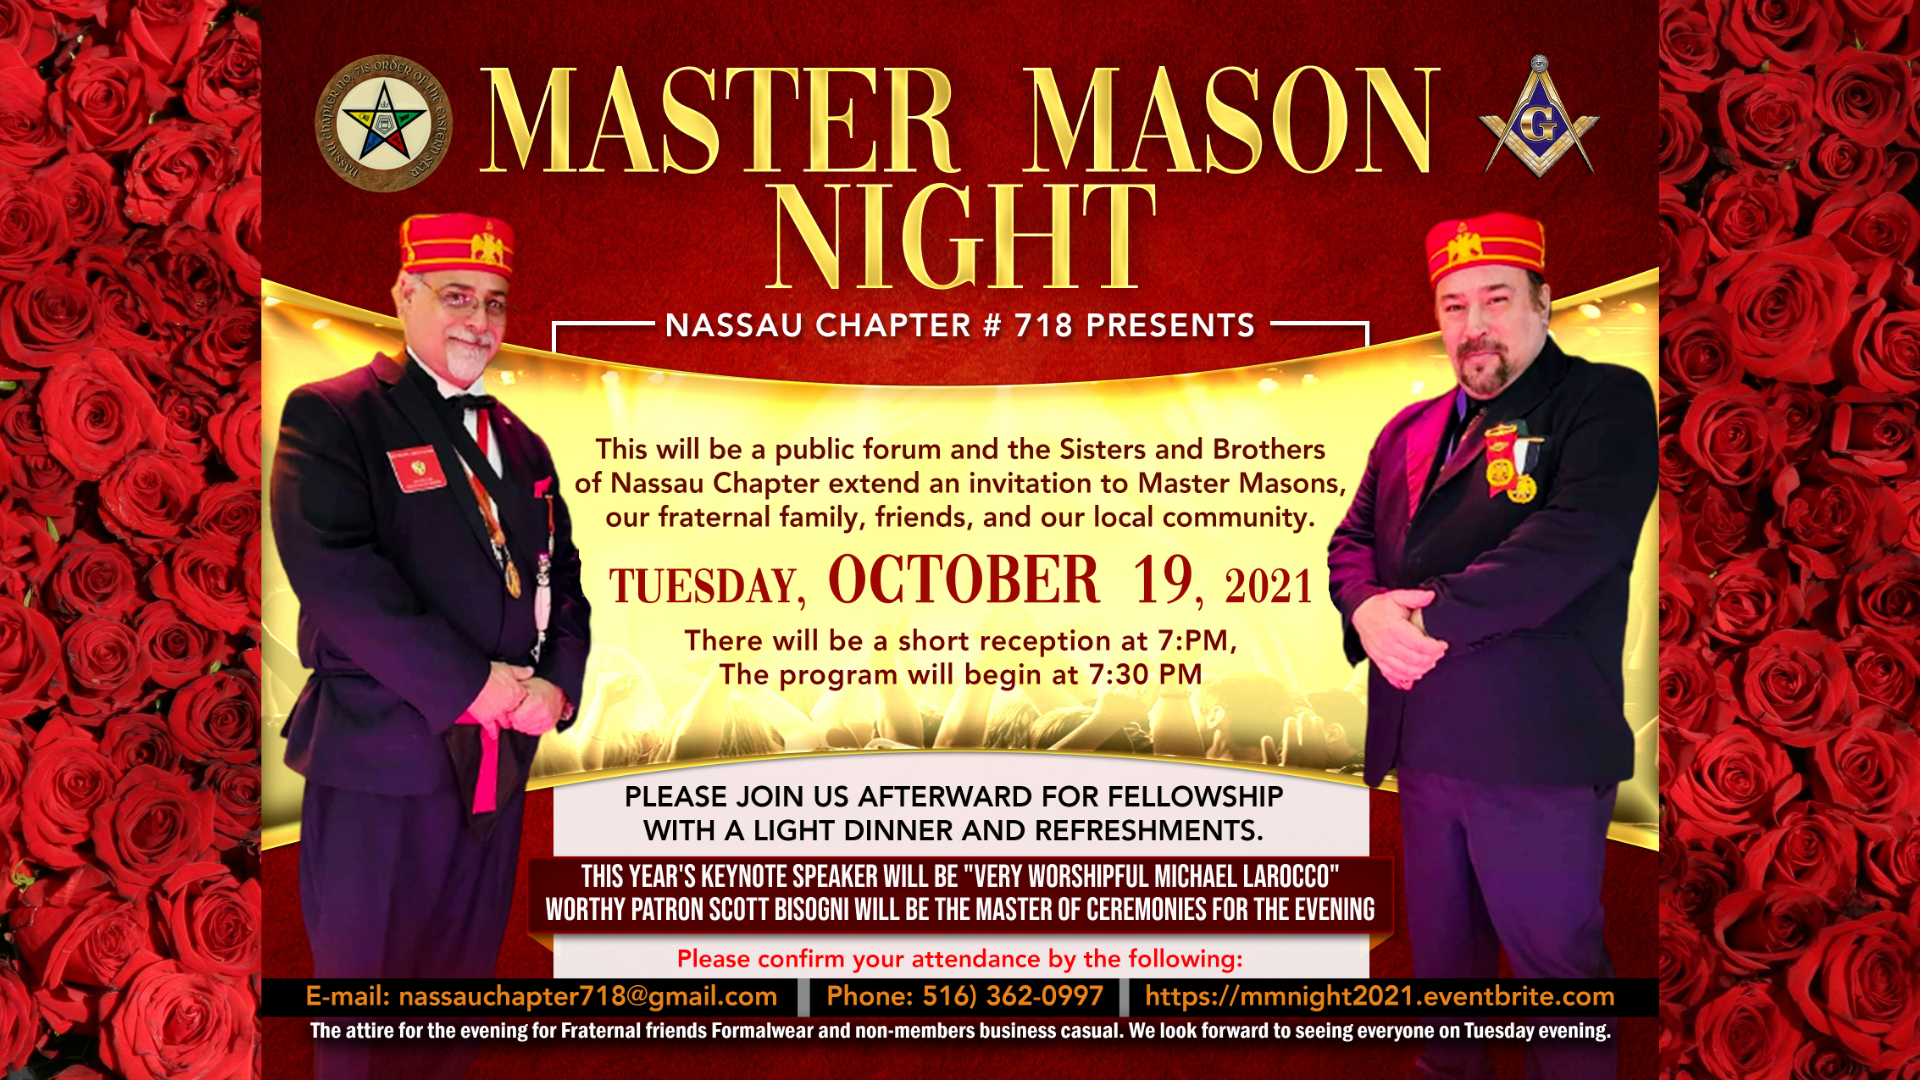 Nassau Chapter # 718 presents Master Mason Night